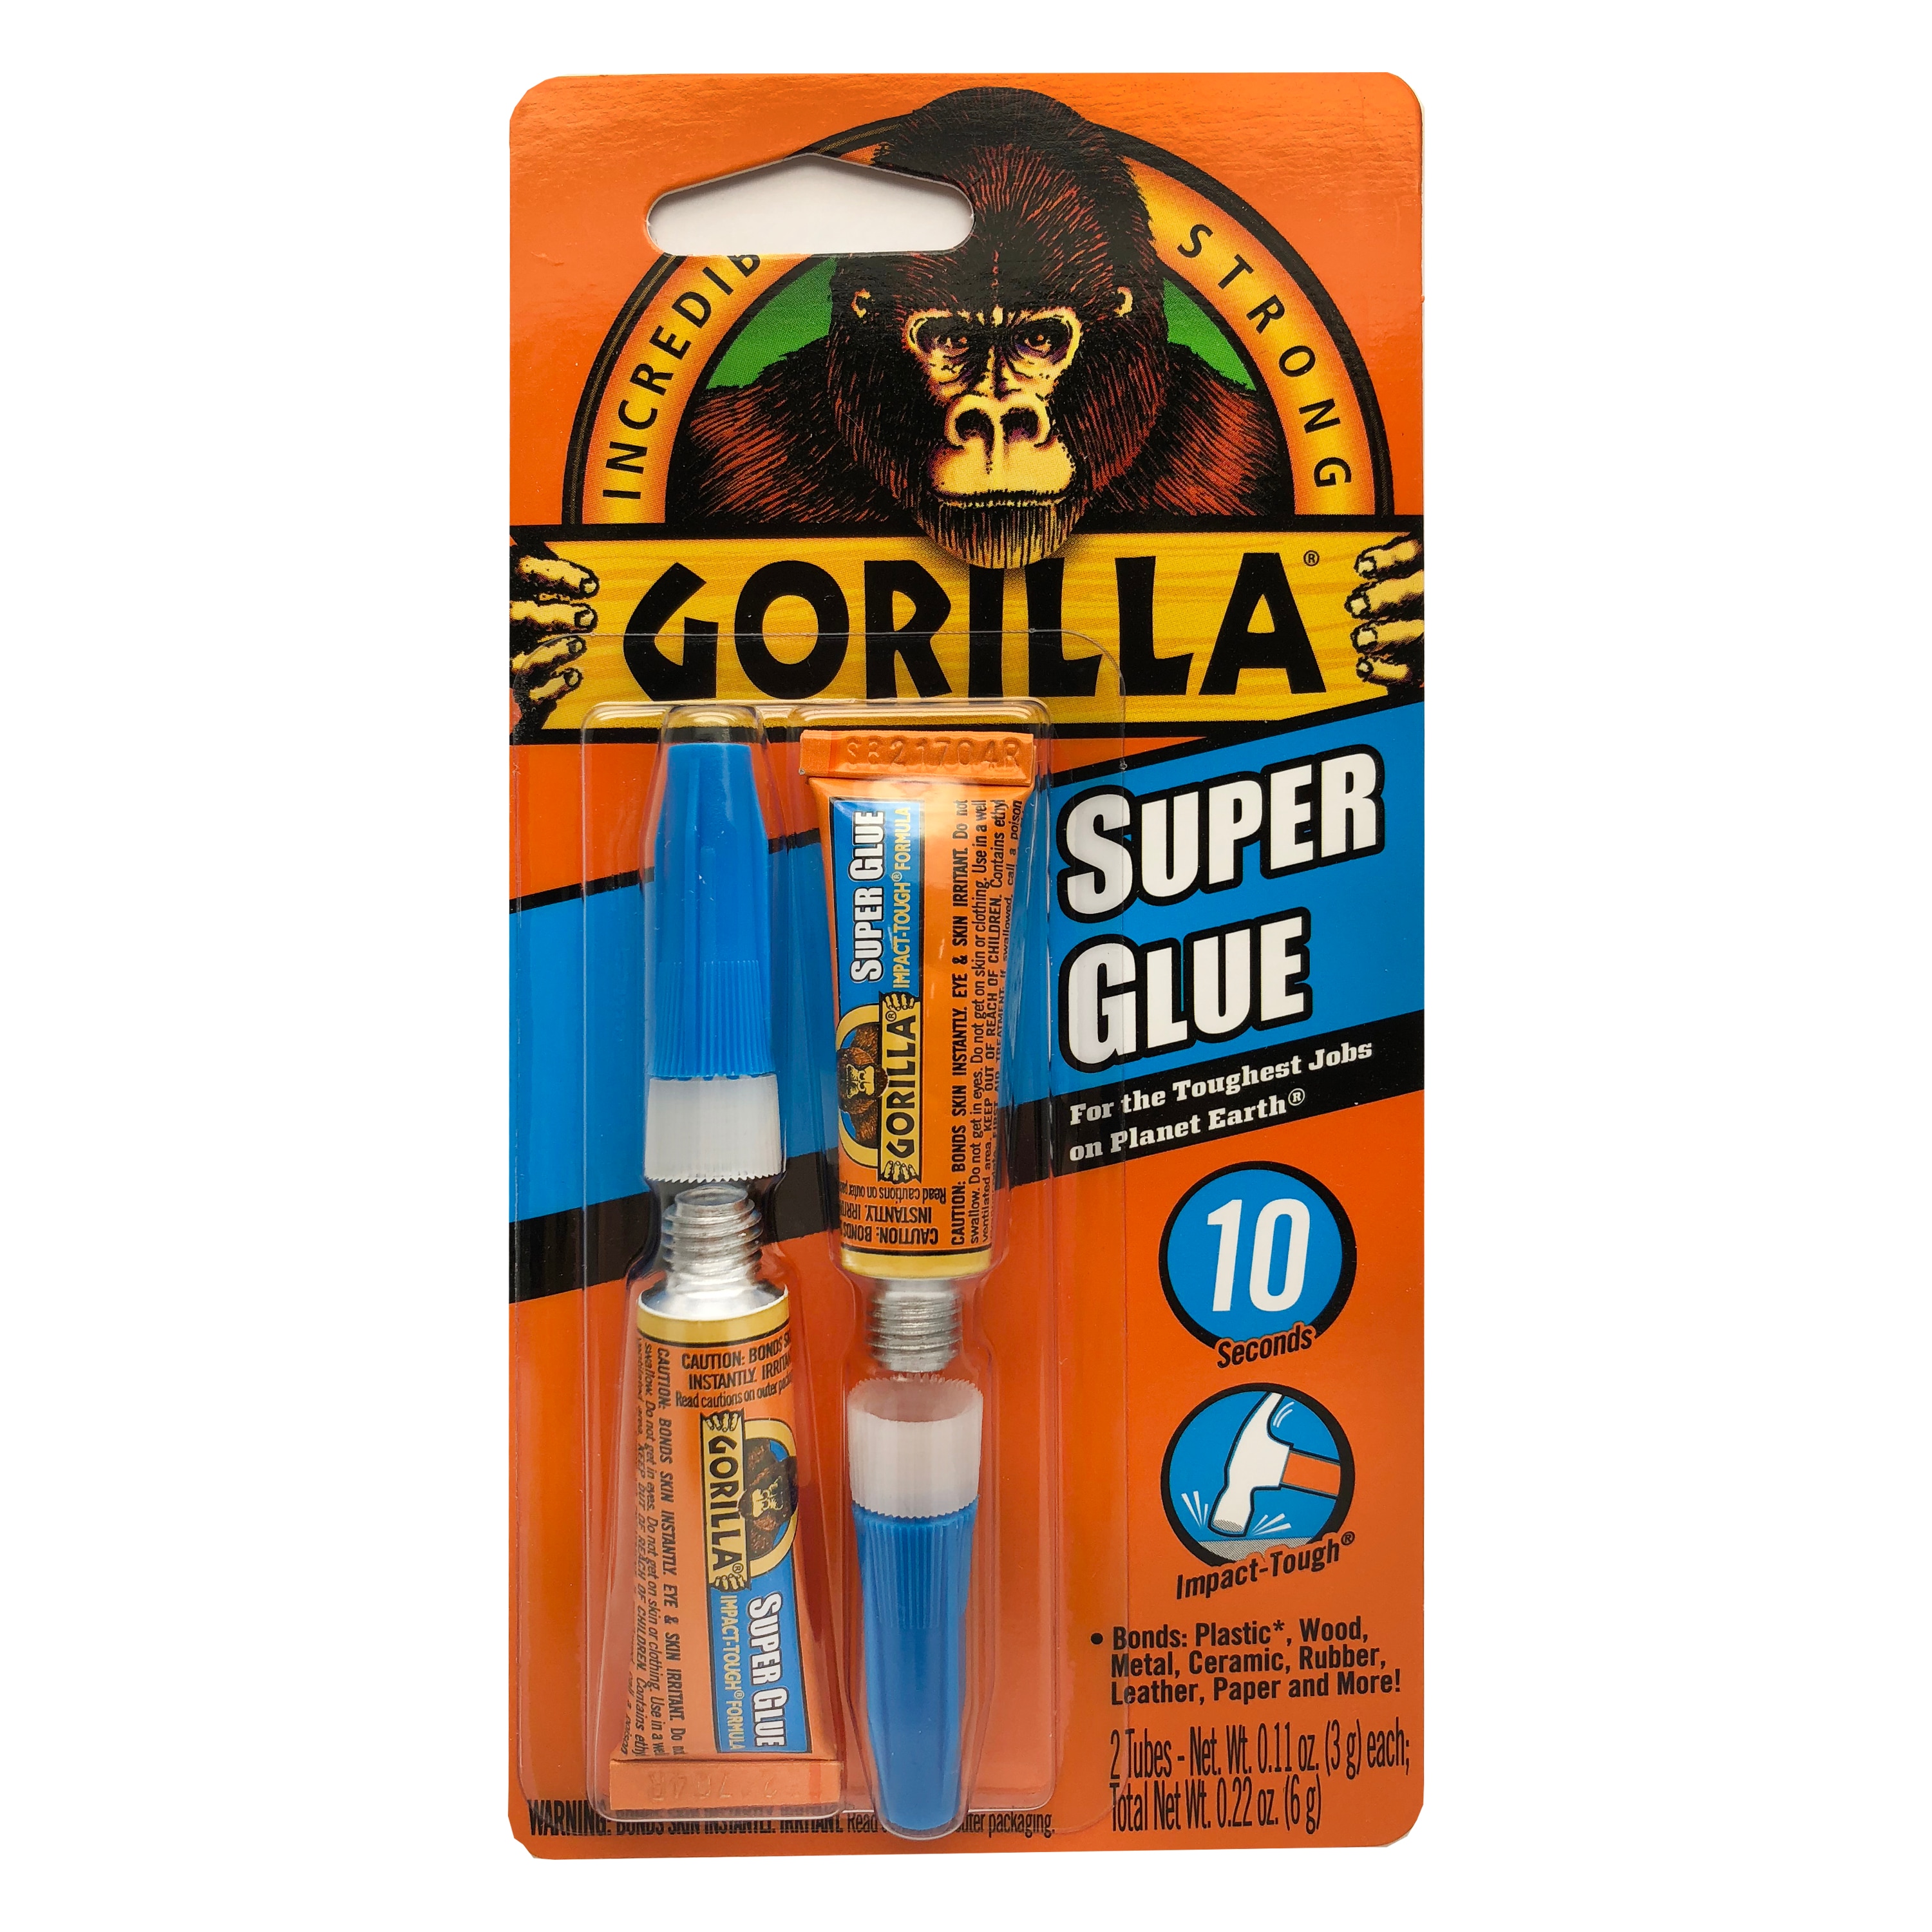 Krazy Glue All Purpose Super Glue Precision Tip 0.07 Oz.,(12 Pack )